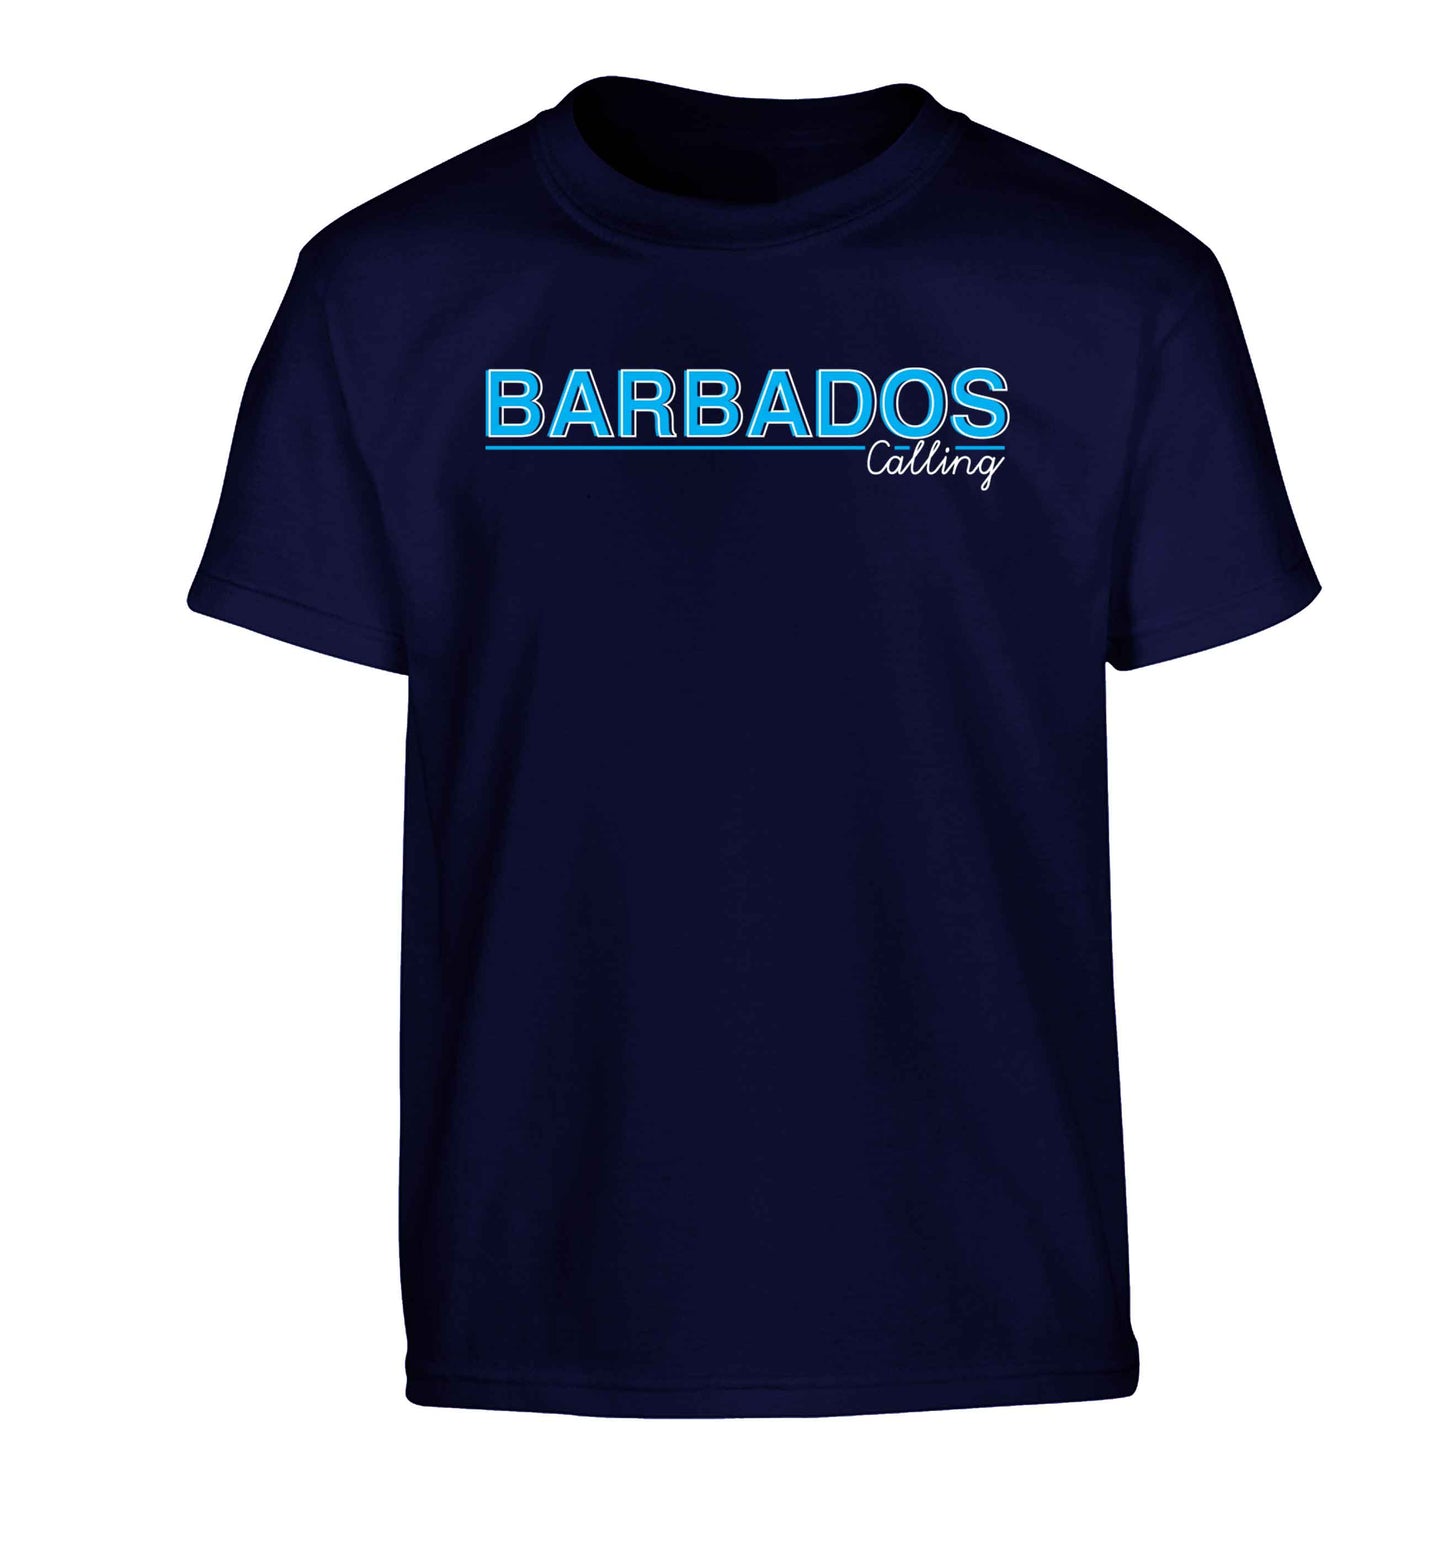 Barbados calling Children's navy Tshirt 12-13 Years